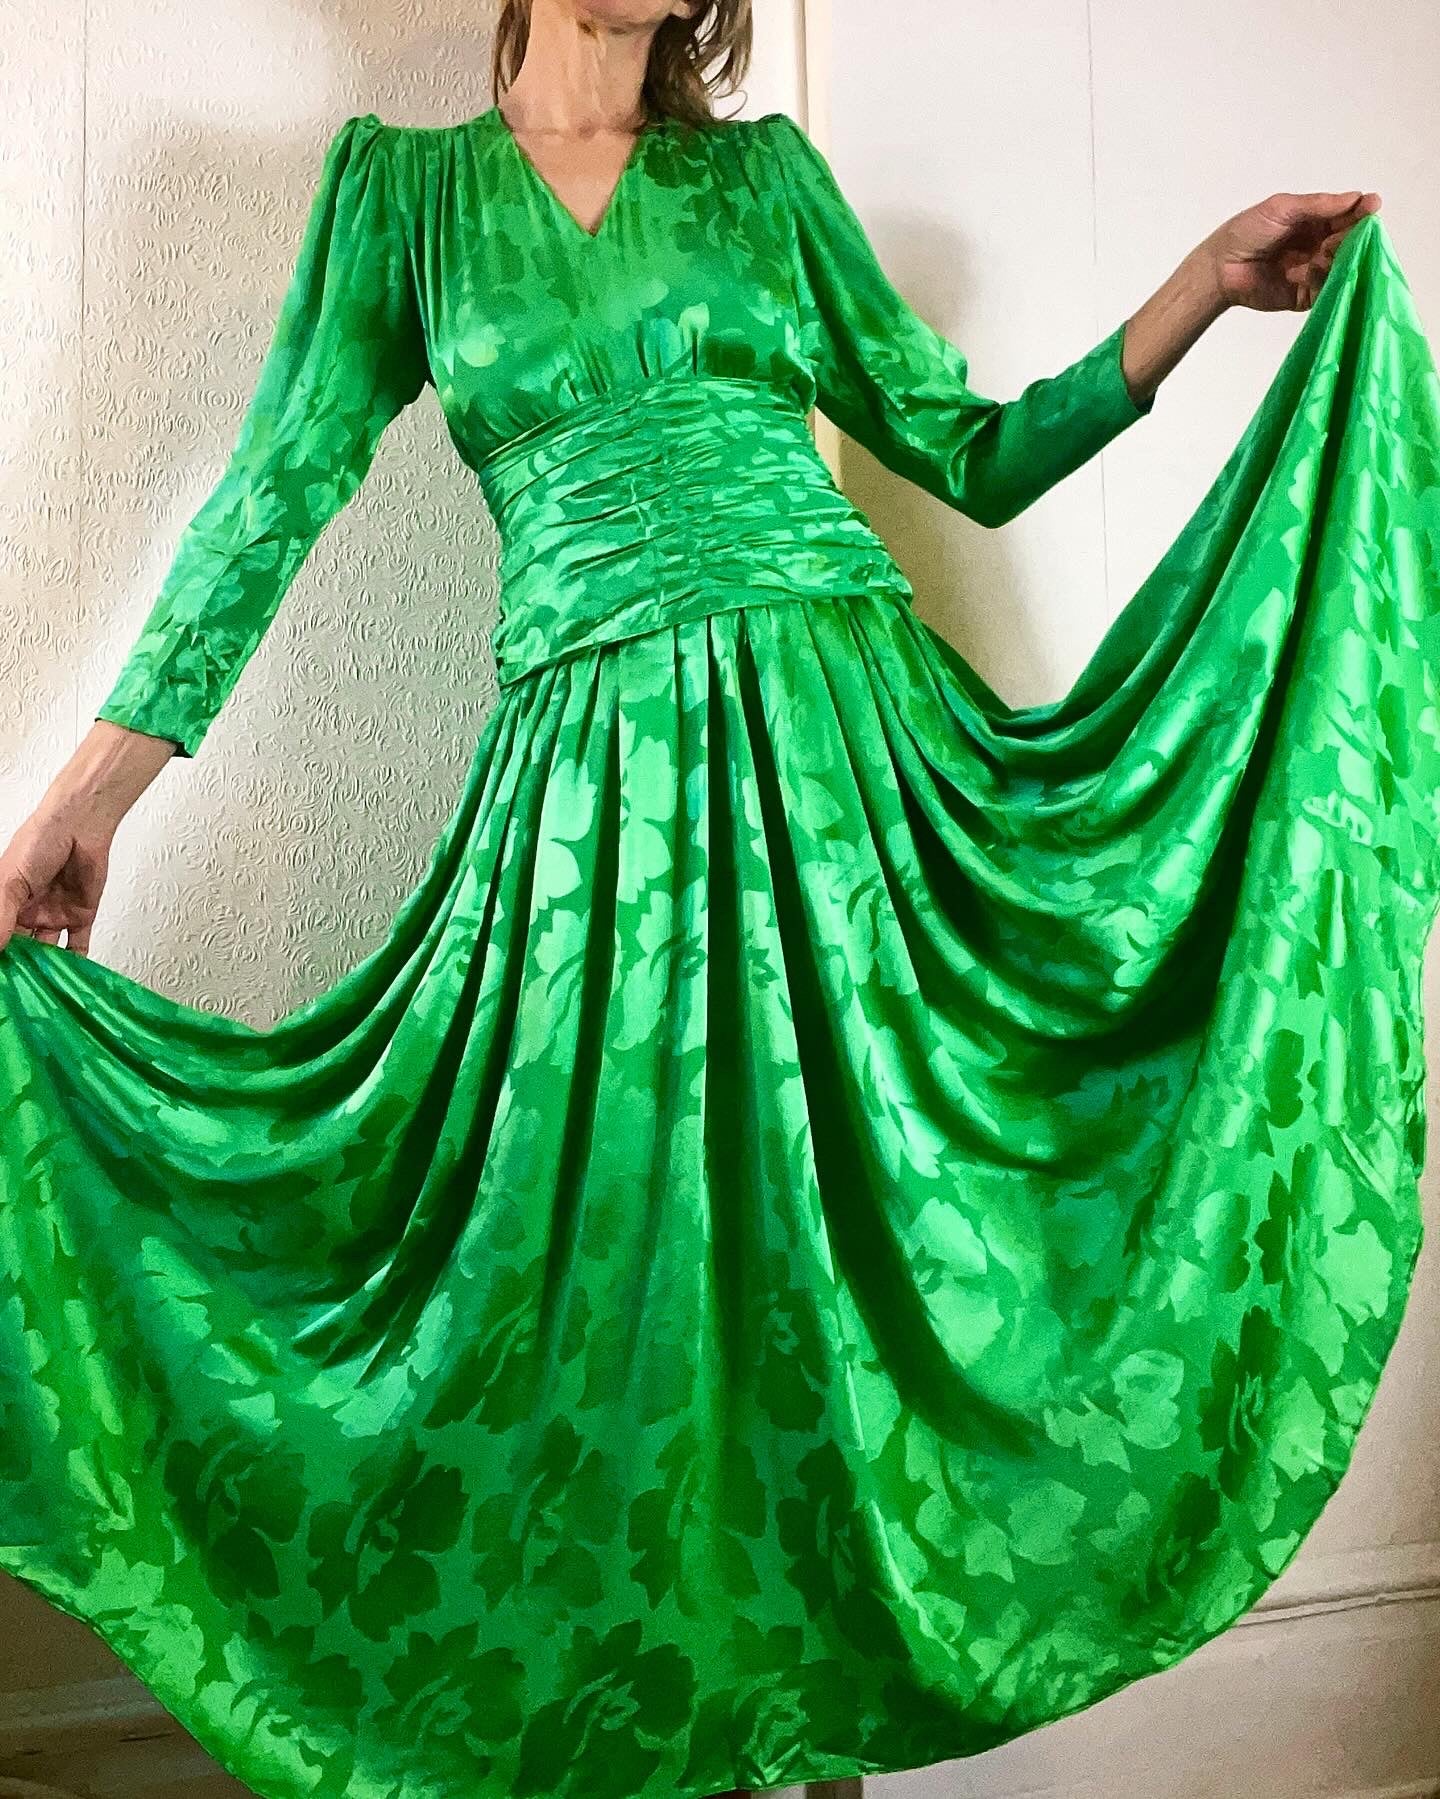 1970s/80s Kelly Green Silk Damask Dress. Size 4